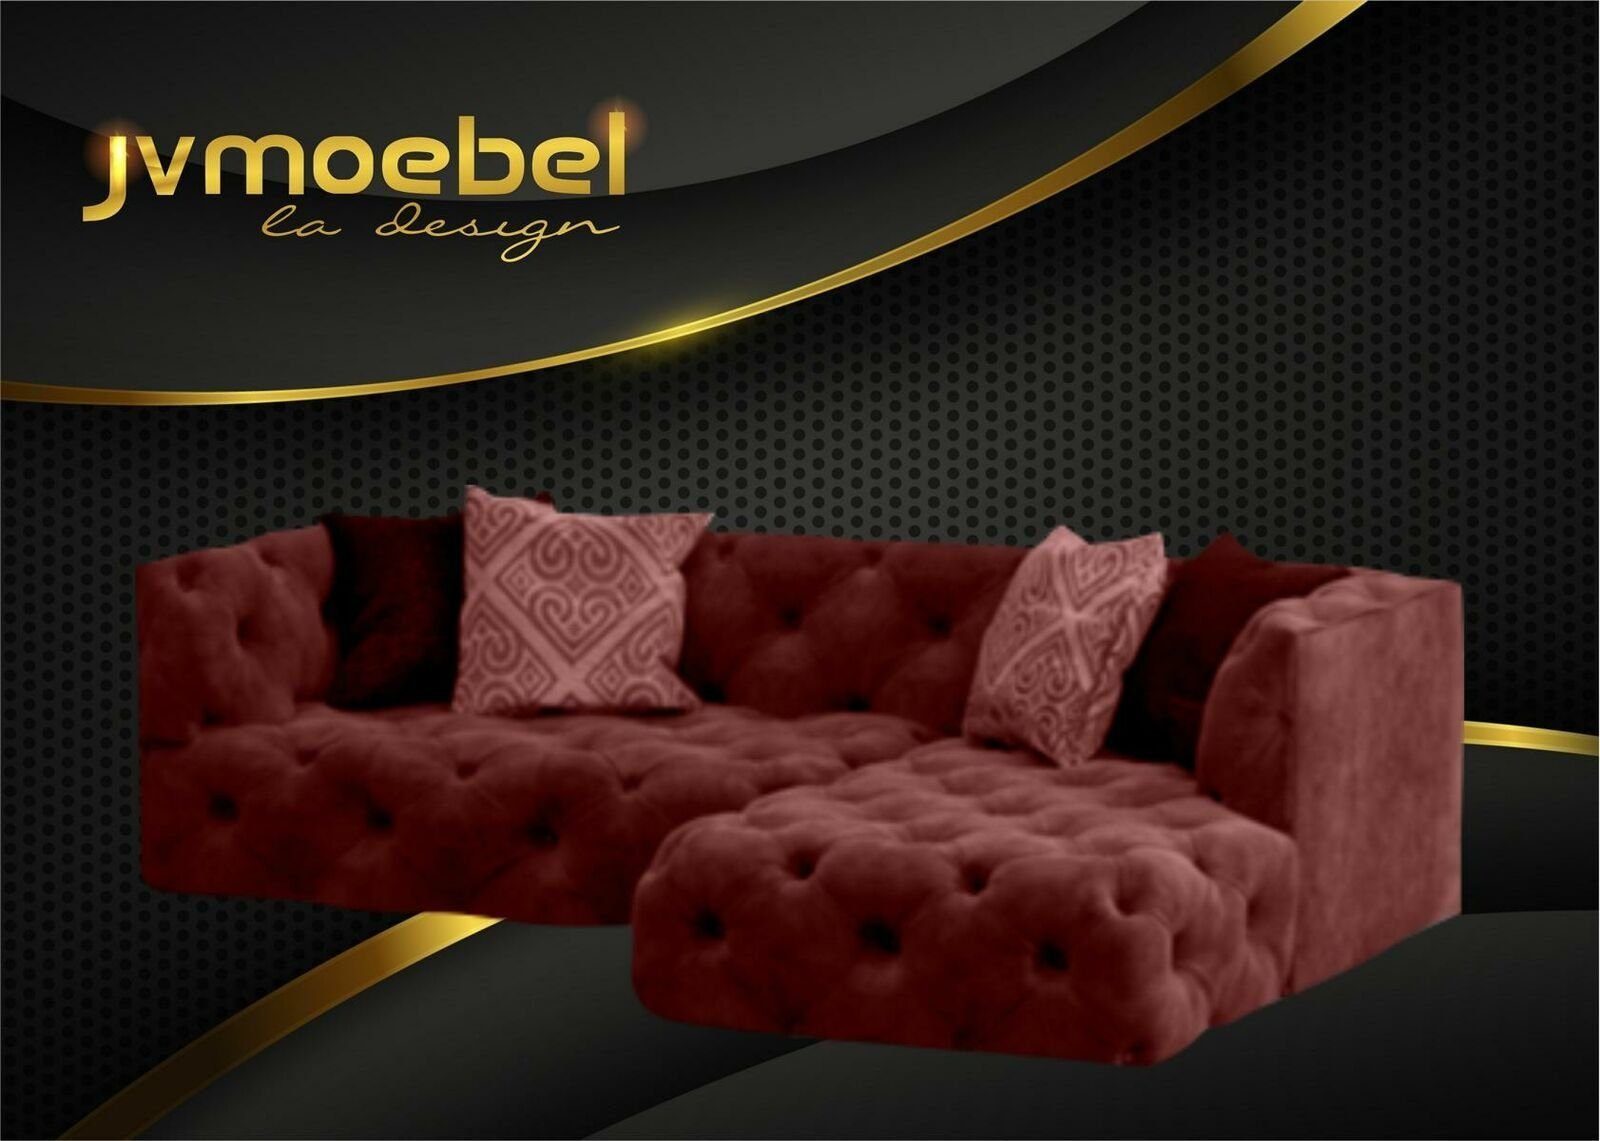 JVmoebel Ecksofa Braunes Chesterfield L-Form Couch Design Polstermöbel Neu, Made in Europe Rot